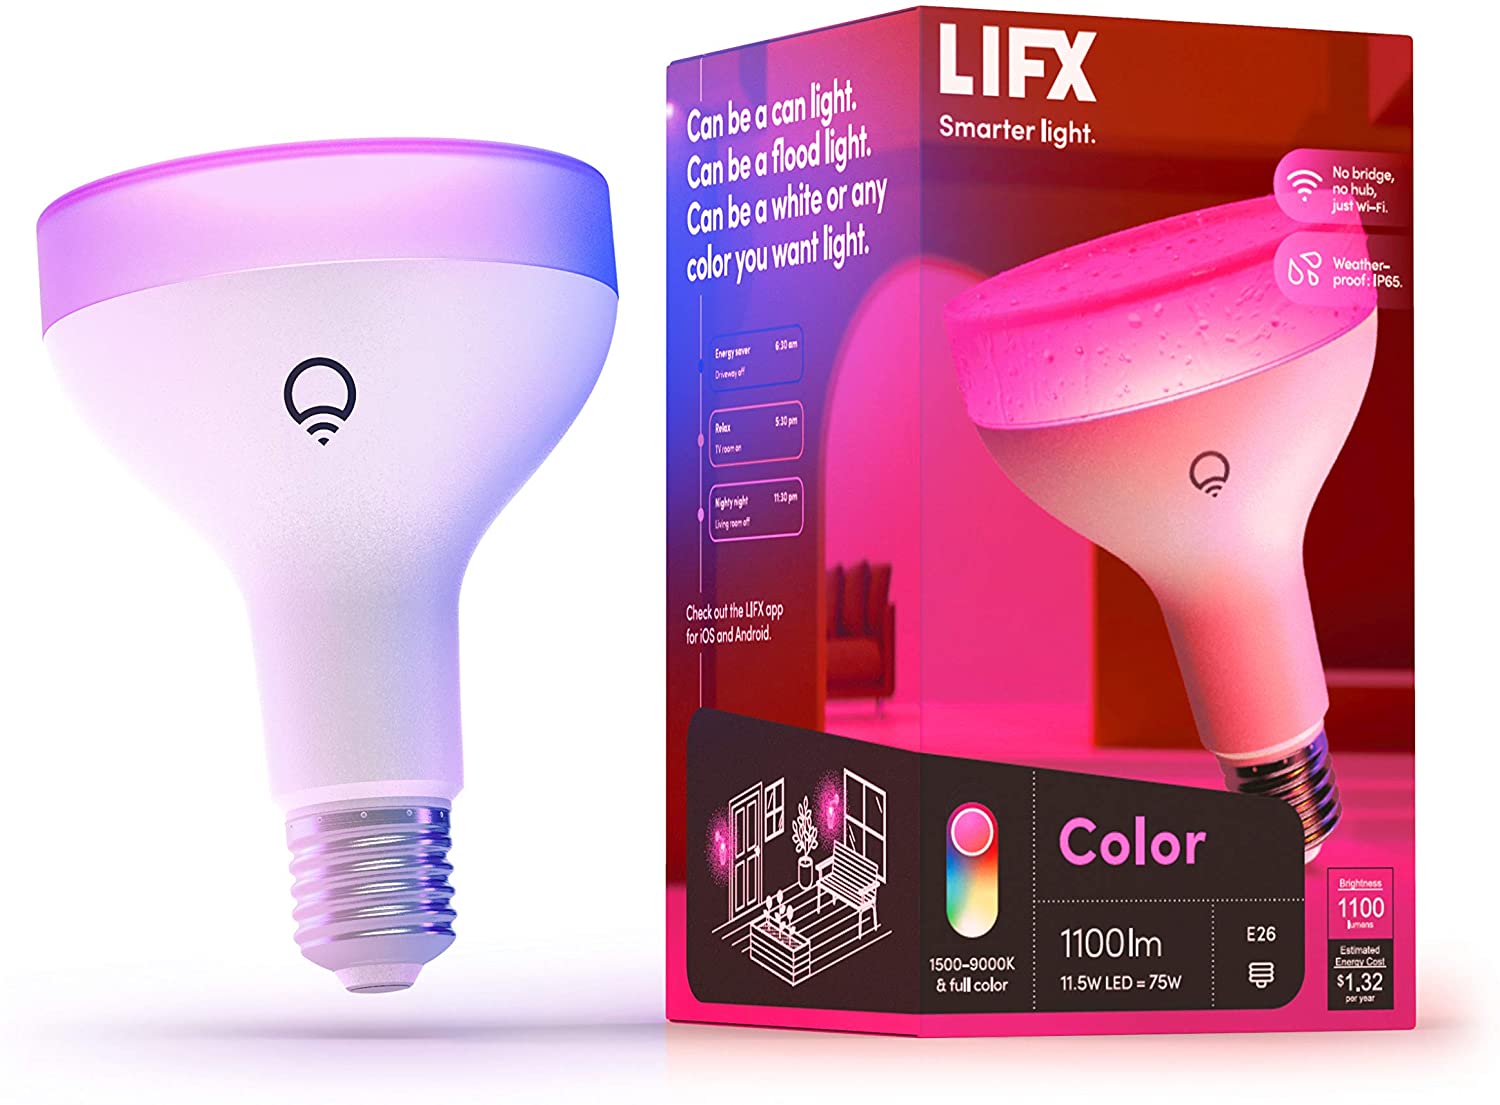 Lifx Color bulb